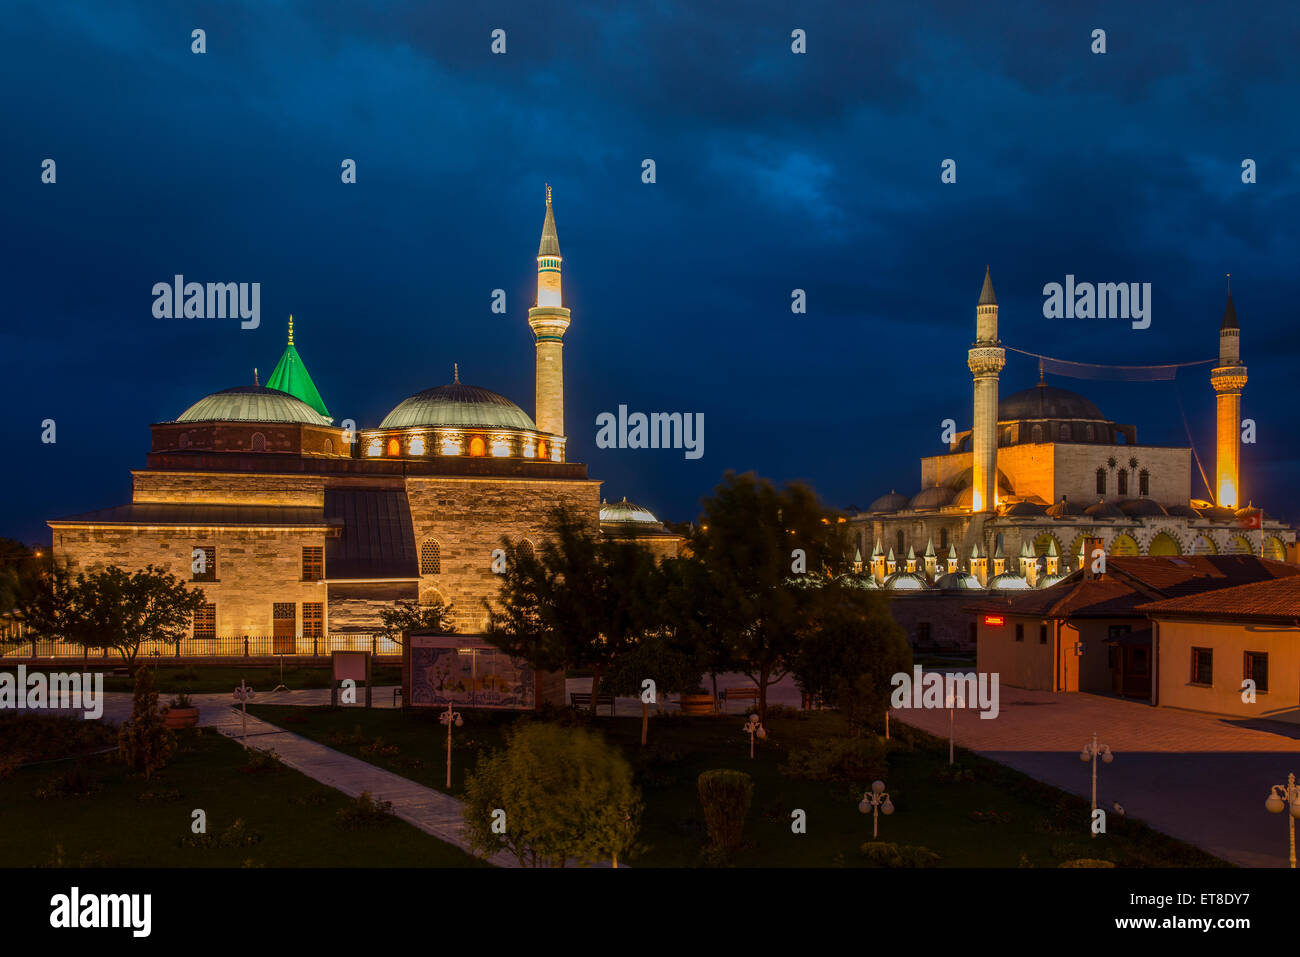 Vue de nuit du musée de Mevlana et mosquée Selimiye, Konya, Turquie Banque D'Images